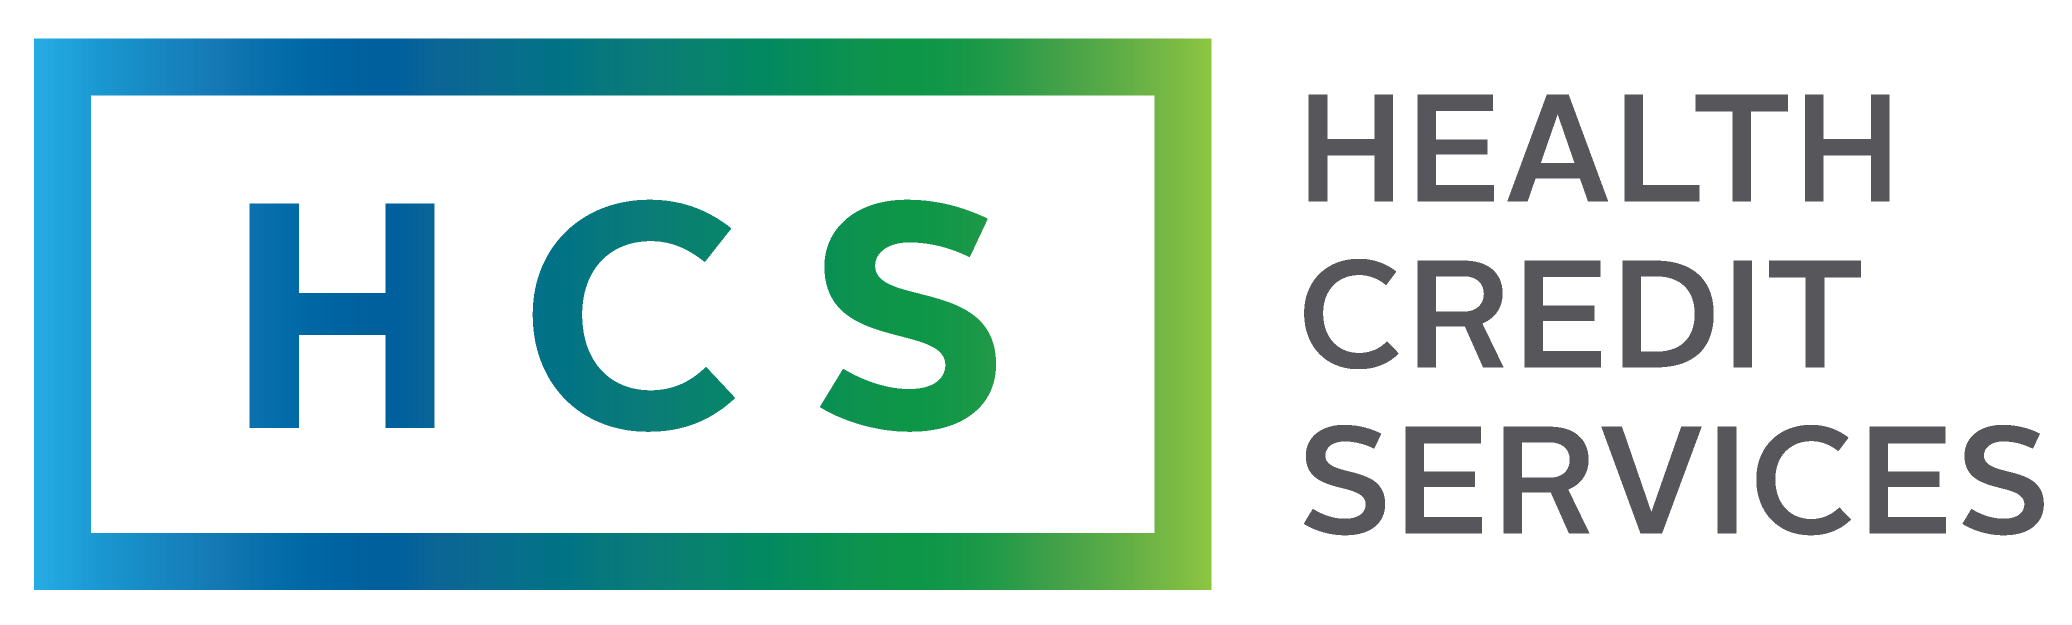 Health Credit Services logo